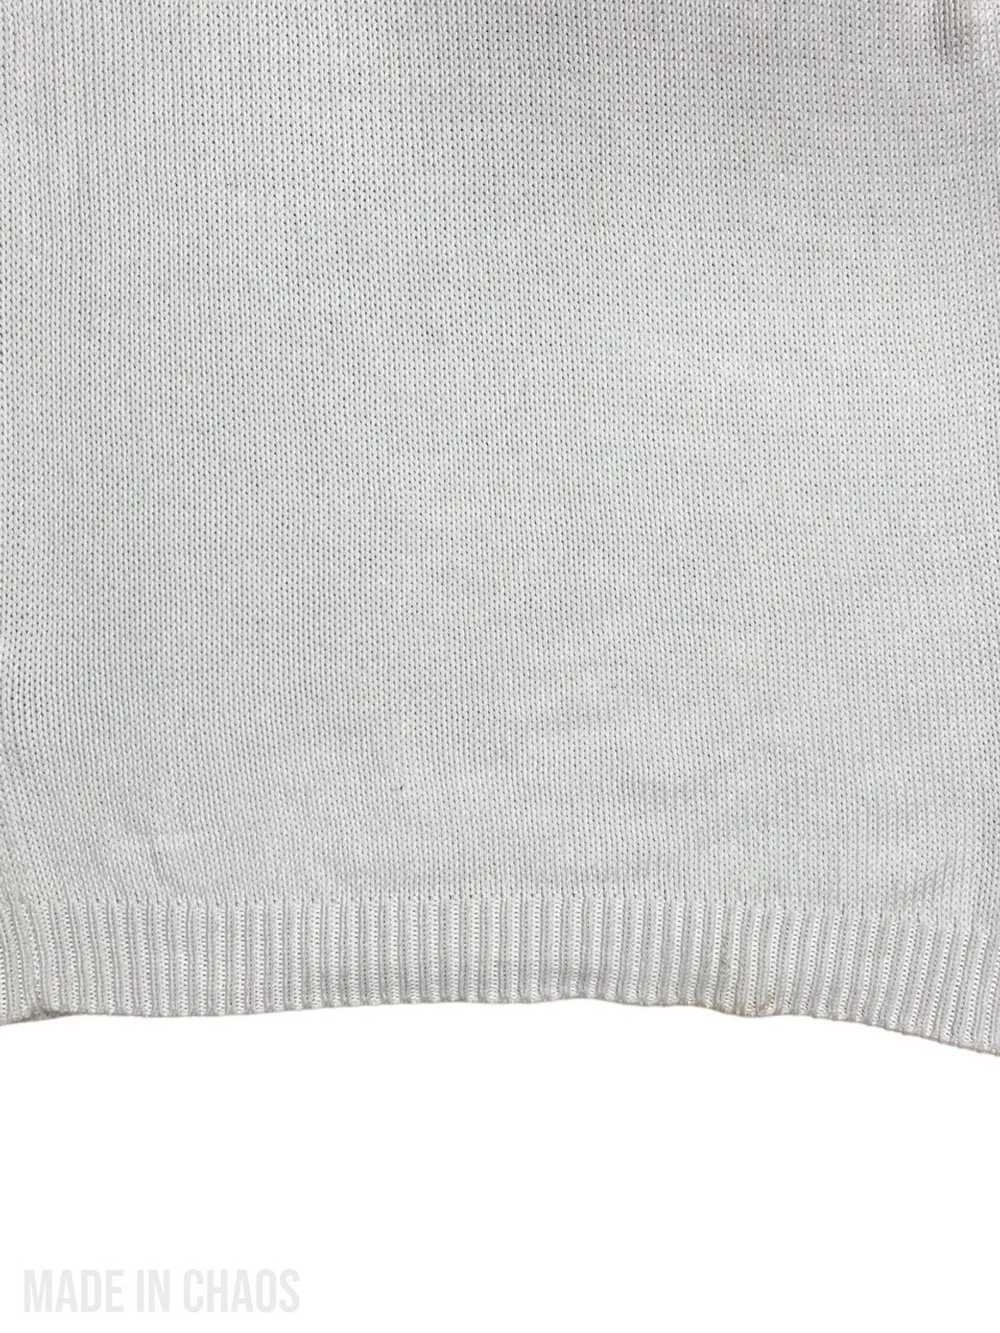 Helmut Lang Helmut Lang 90’s Sleeveless Knitwear - image 6